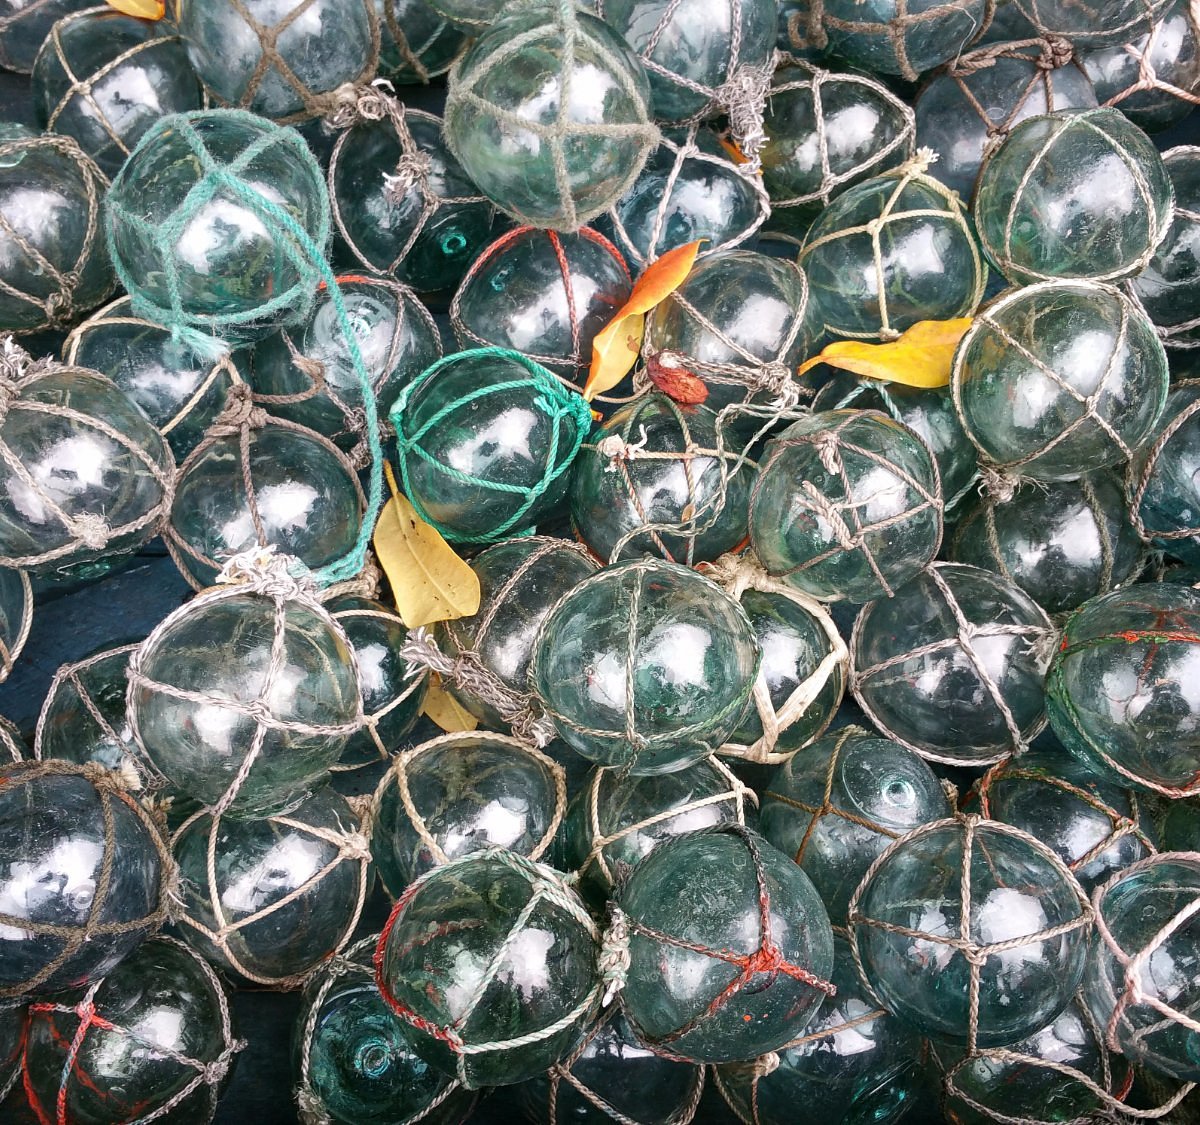 Boys on Japanese Glass Fishing Balls on Willapa Bay Beach